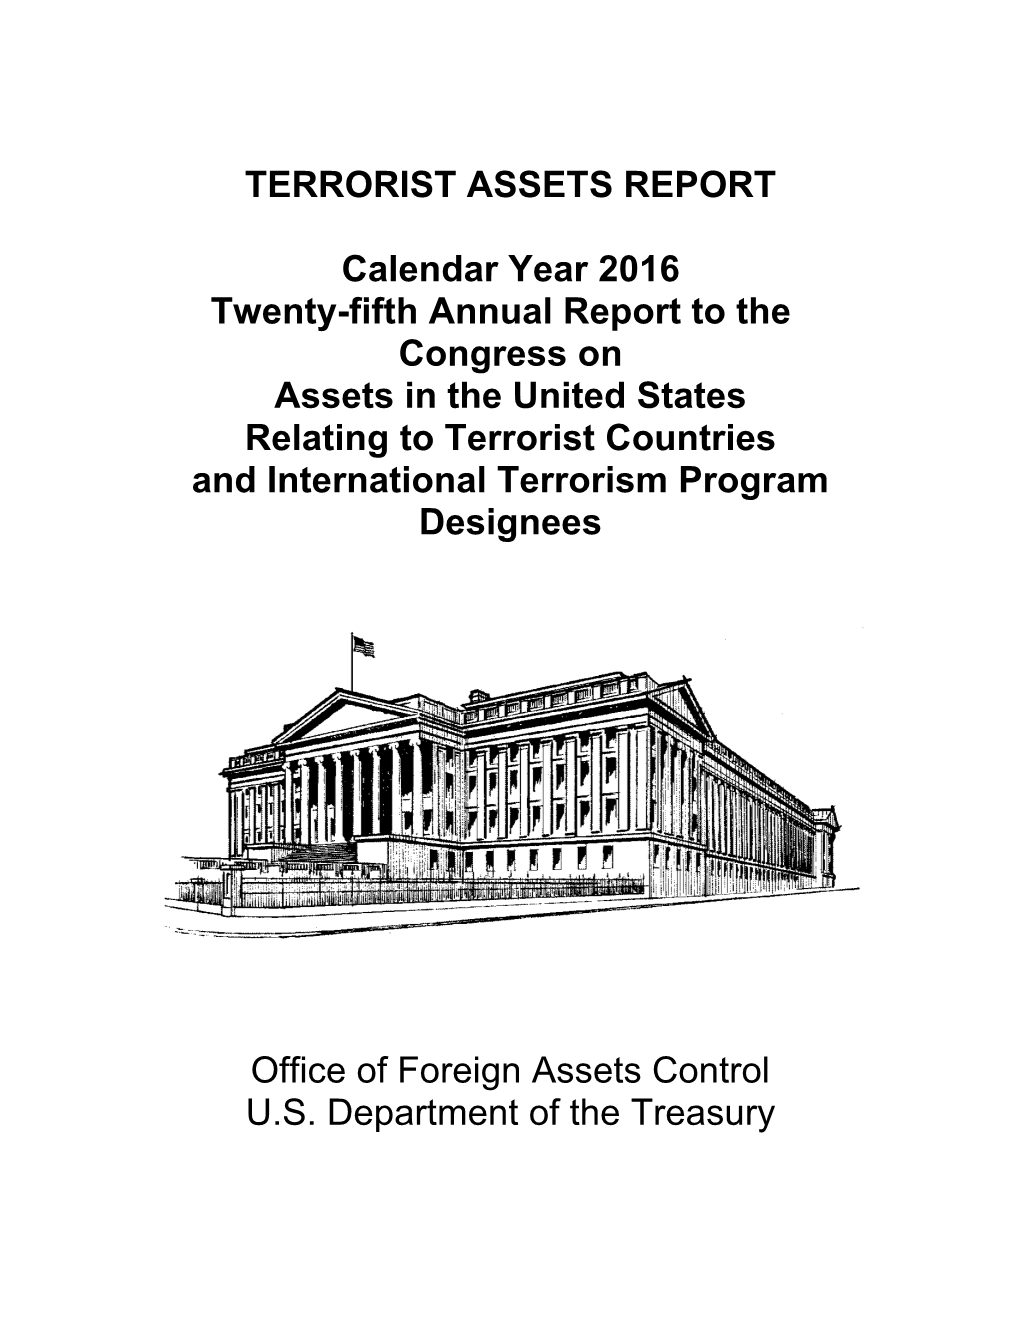 Terrorist Assets Report 2016